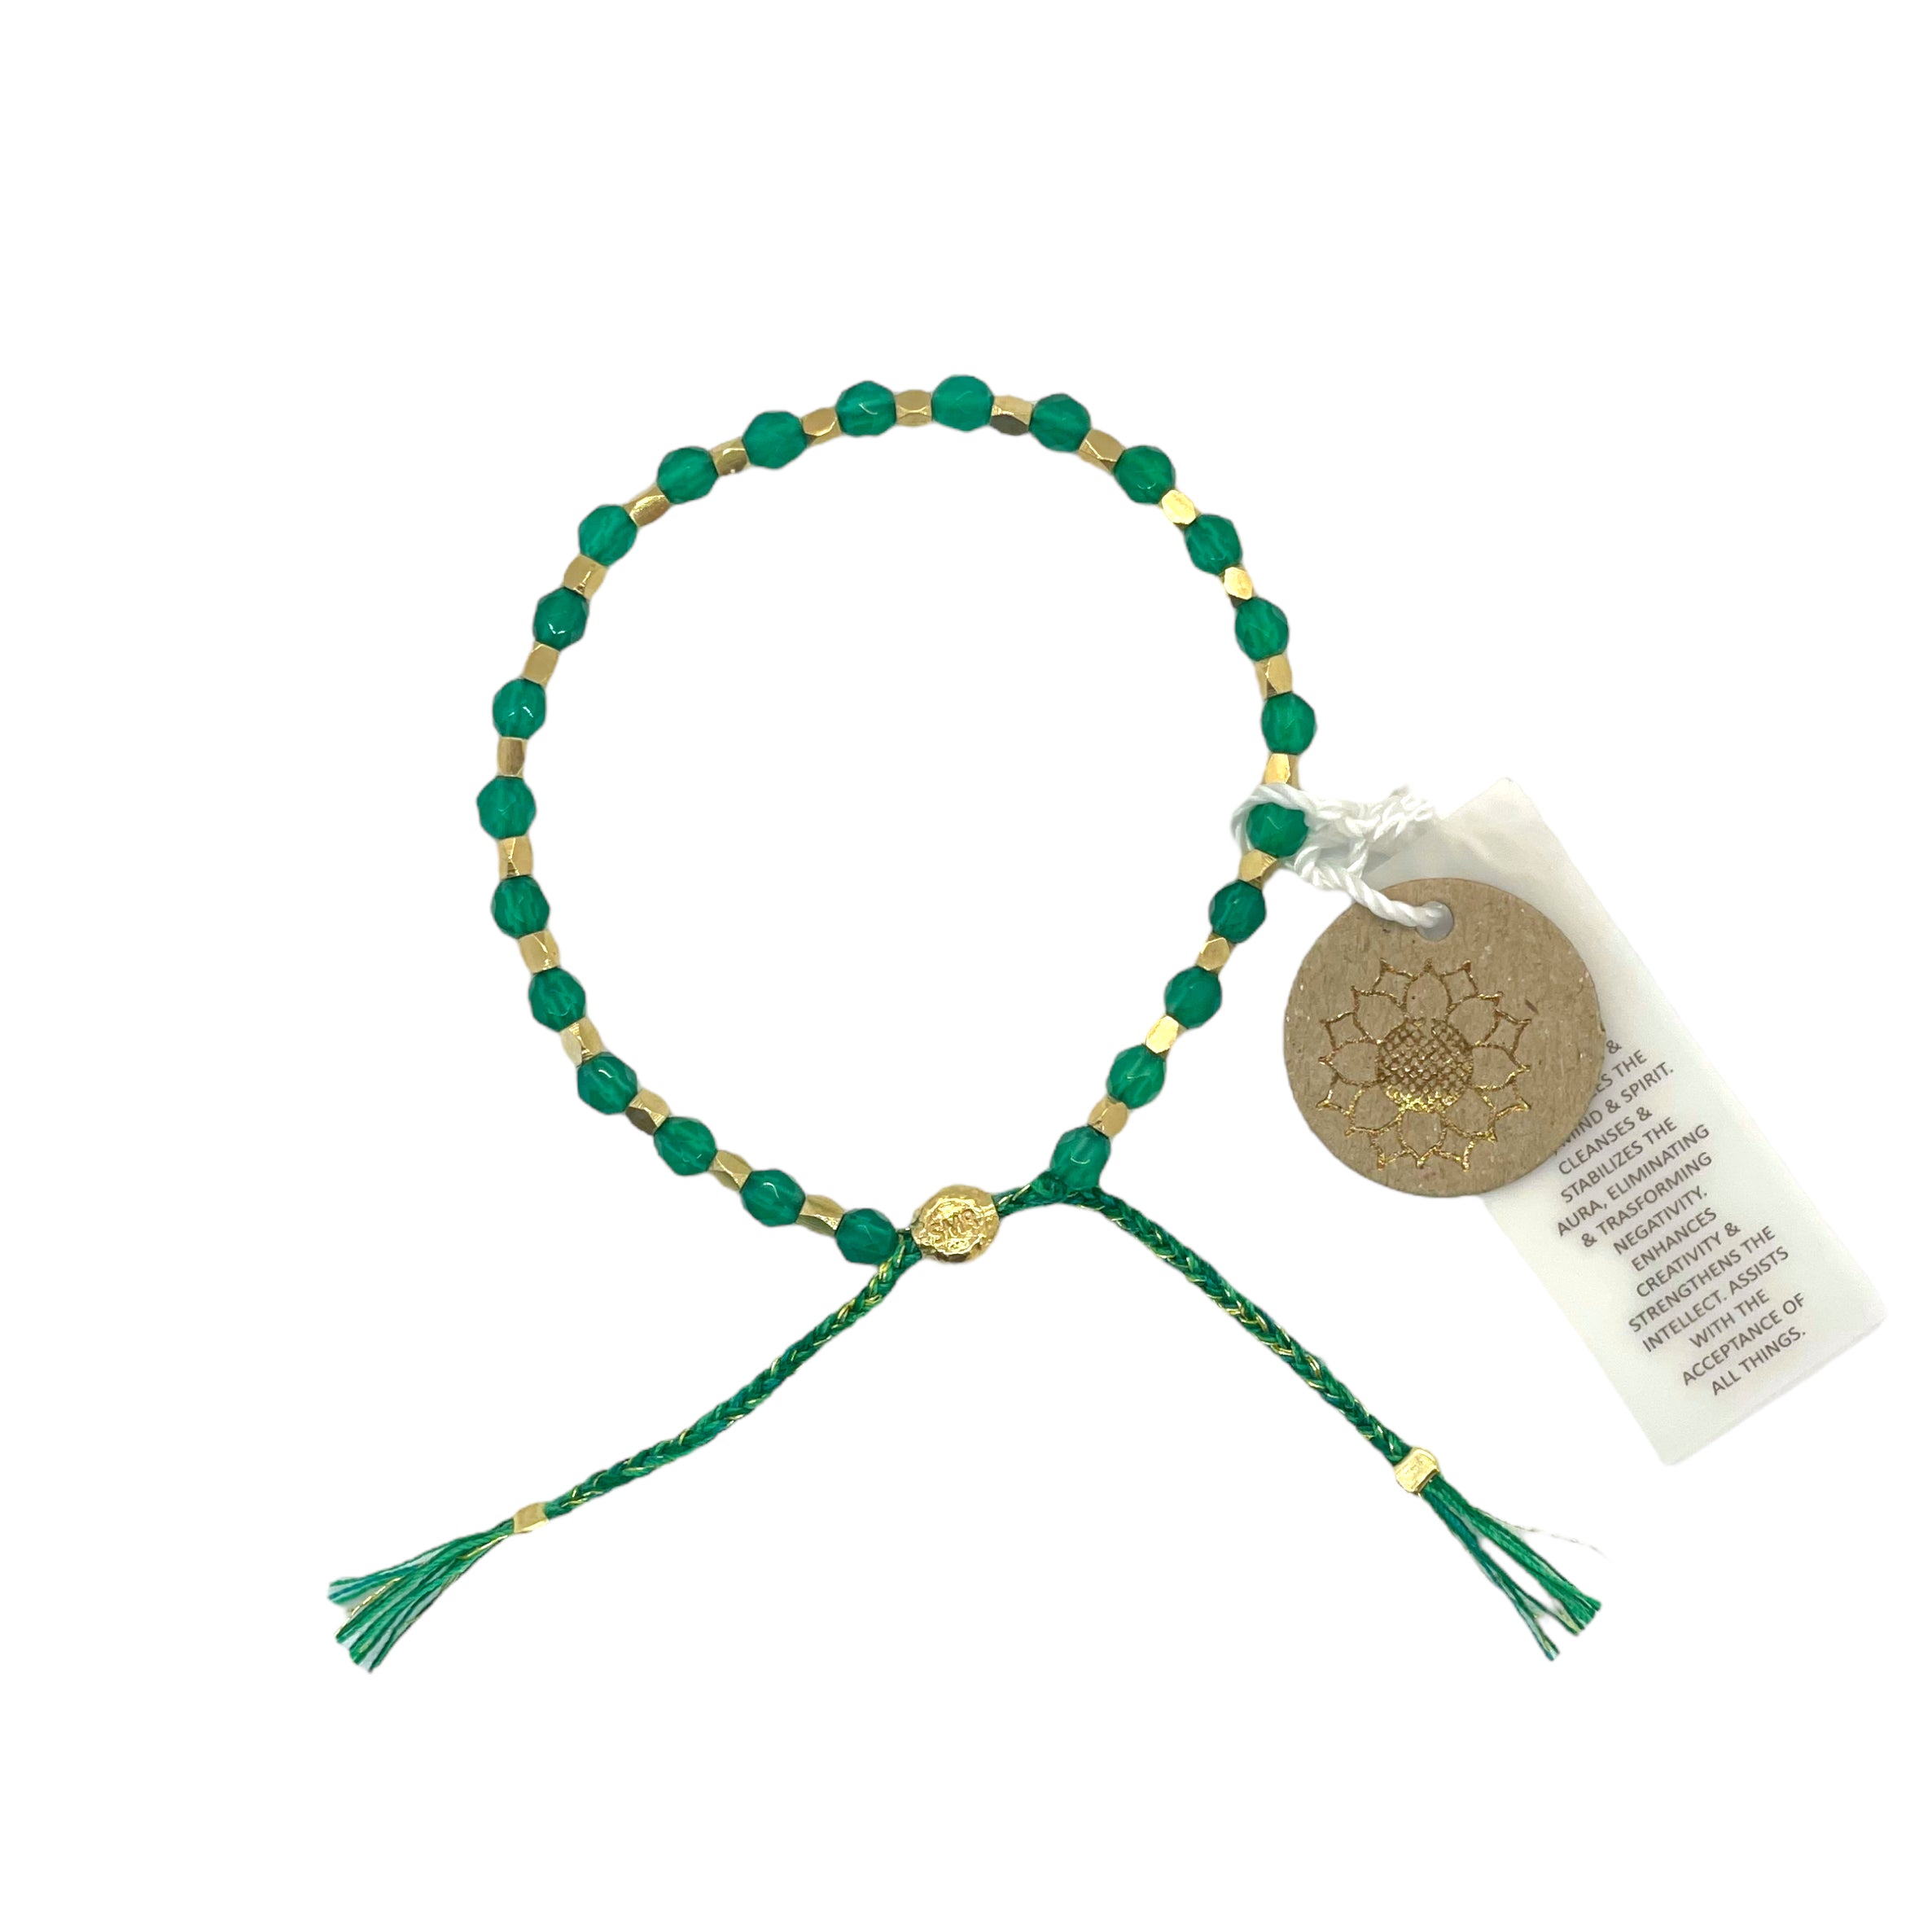 smr // green agate // Signature Collection bracelet